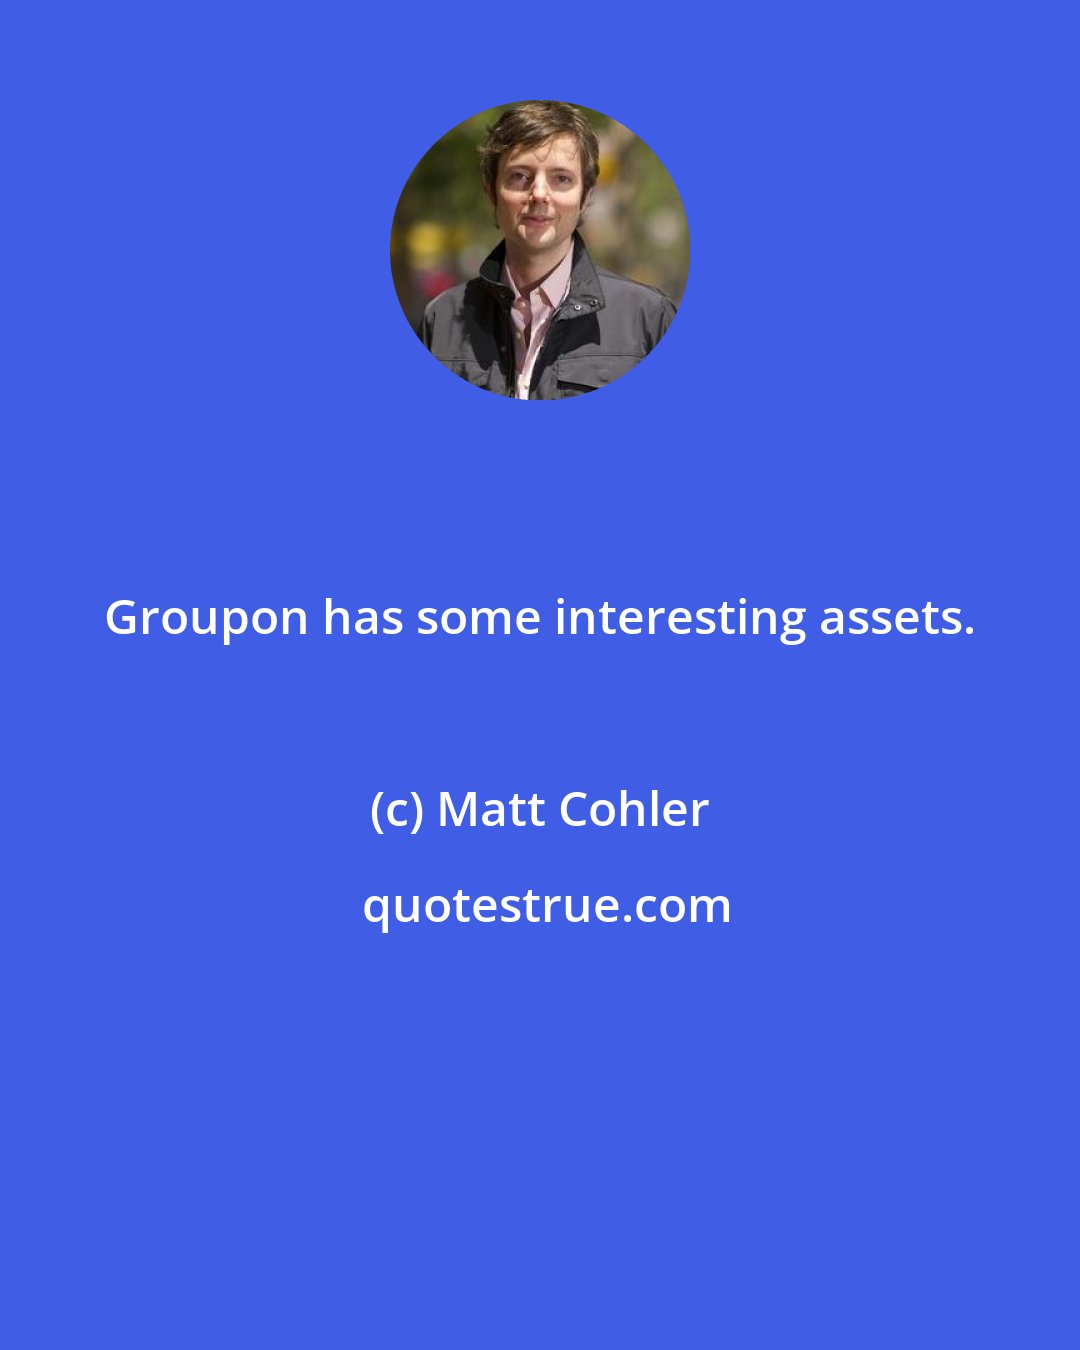 Matt Cohler: Groupon has some interesting assets.